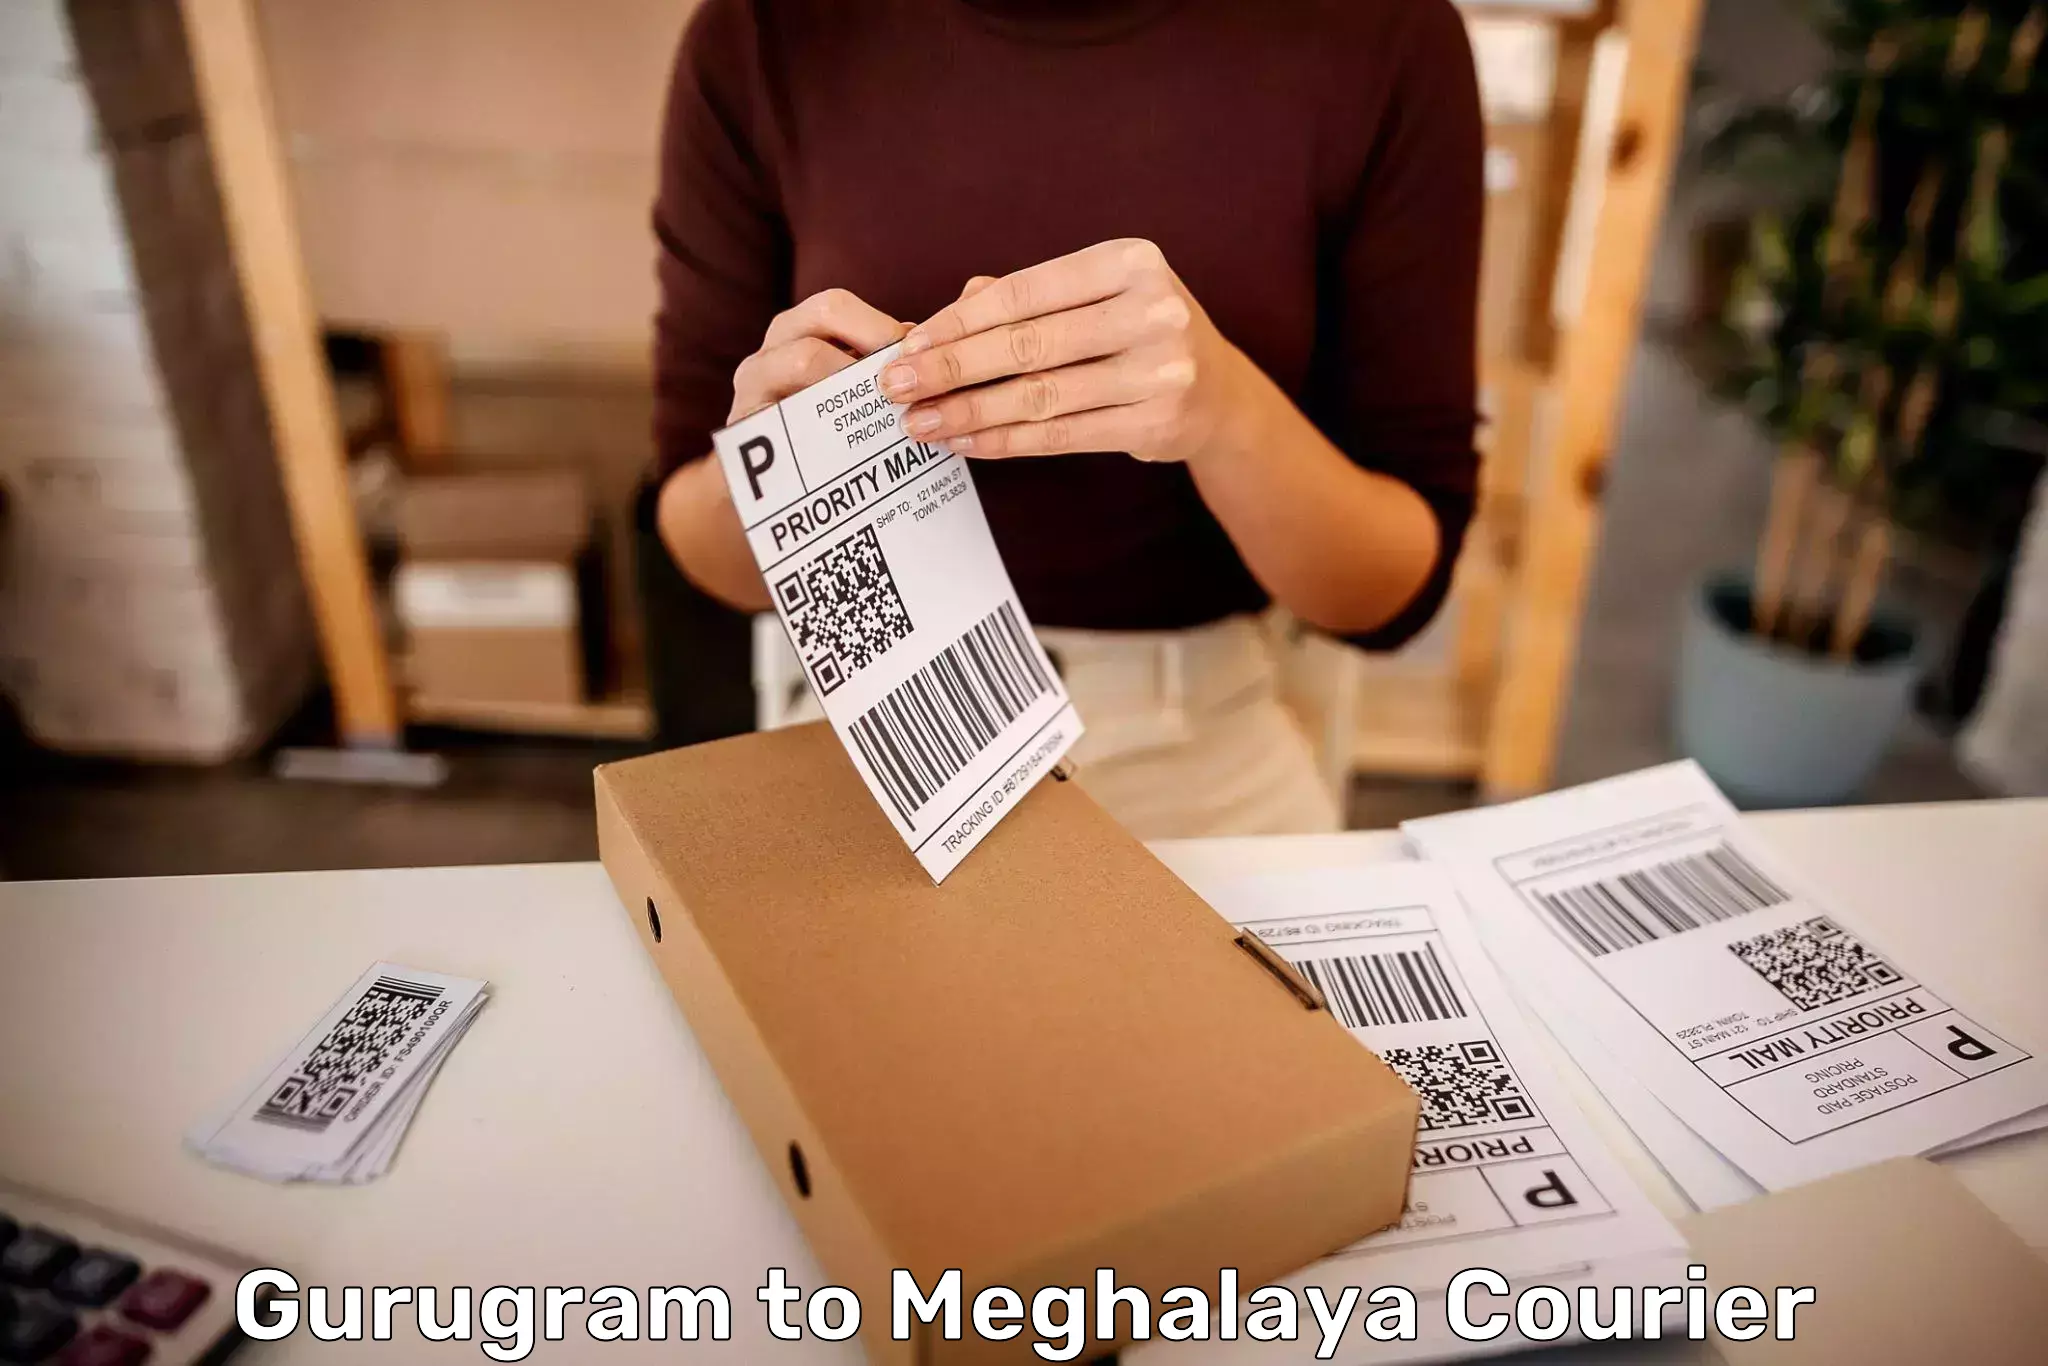 Baggage relocation service Gurugram to Meghalaya